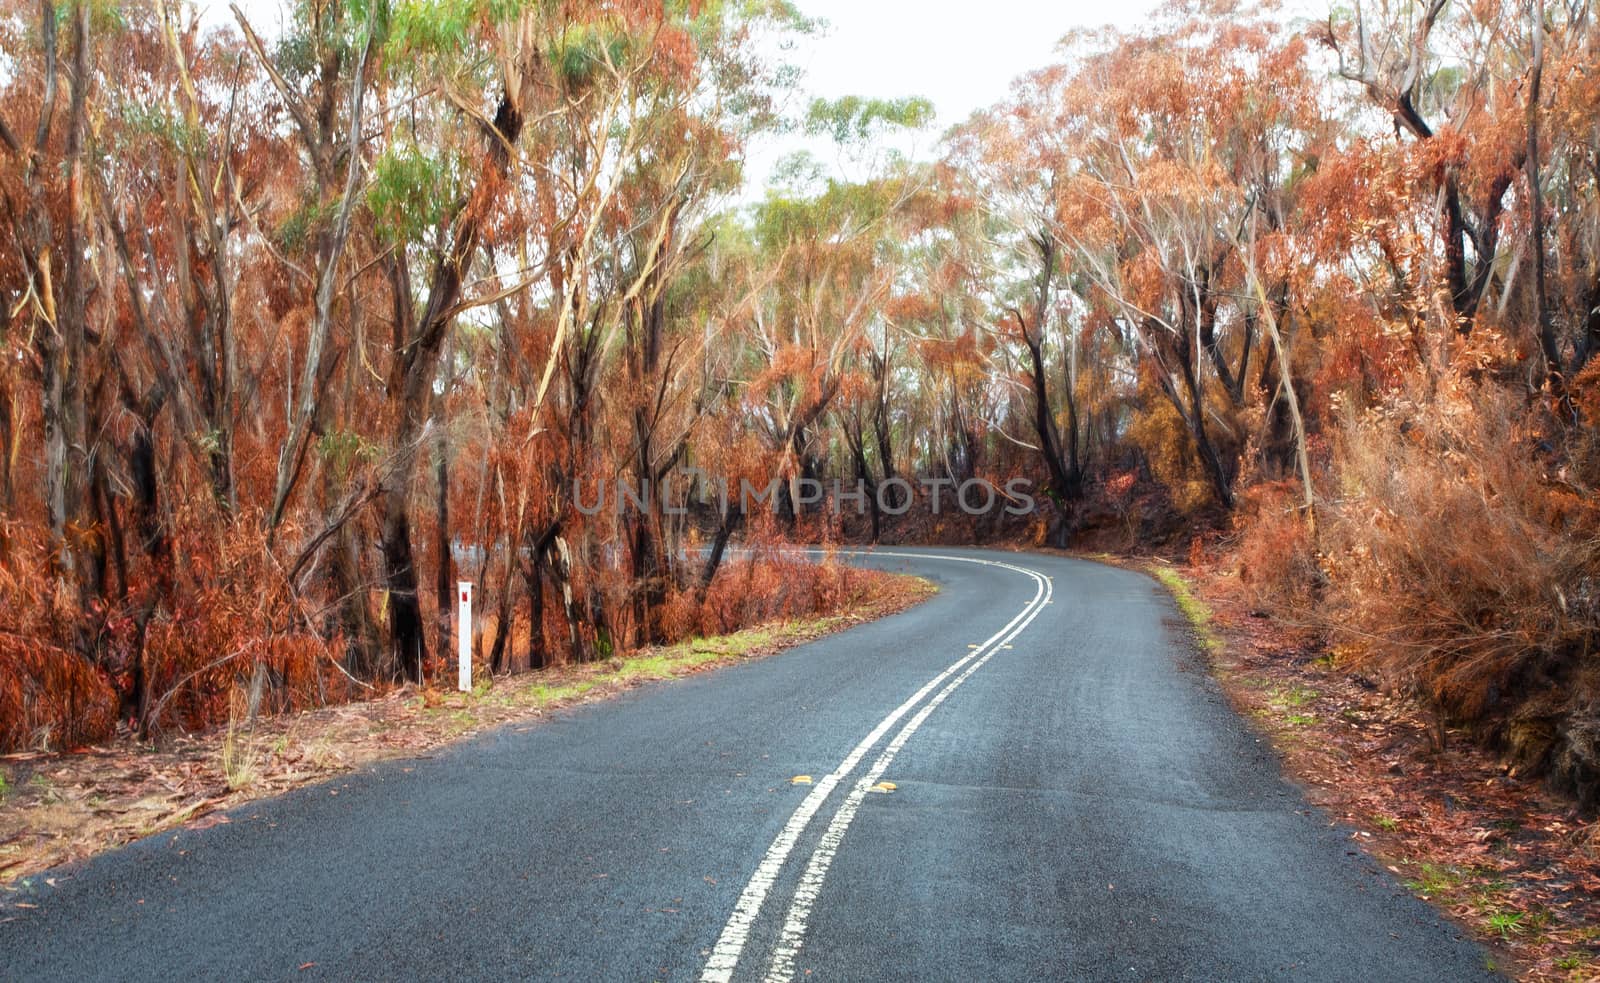 Curving road through burnt bush land in Australia after bush fires of the summer season